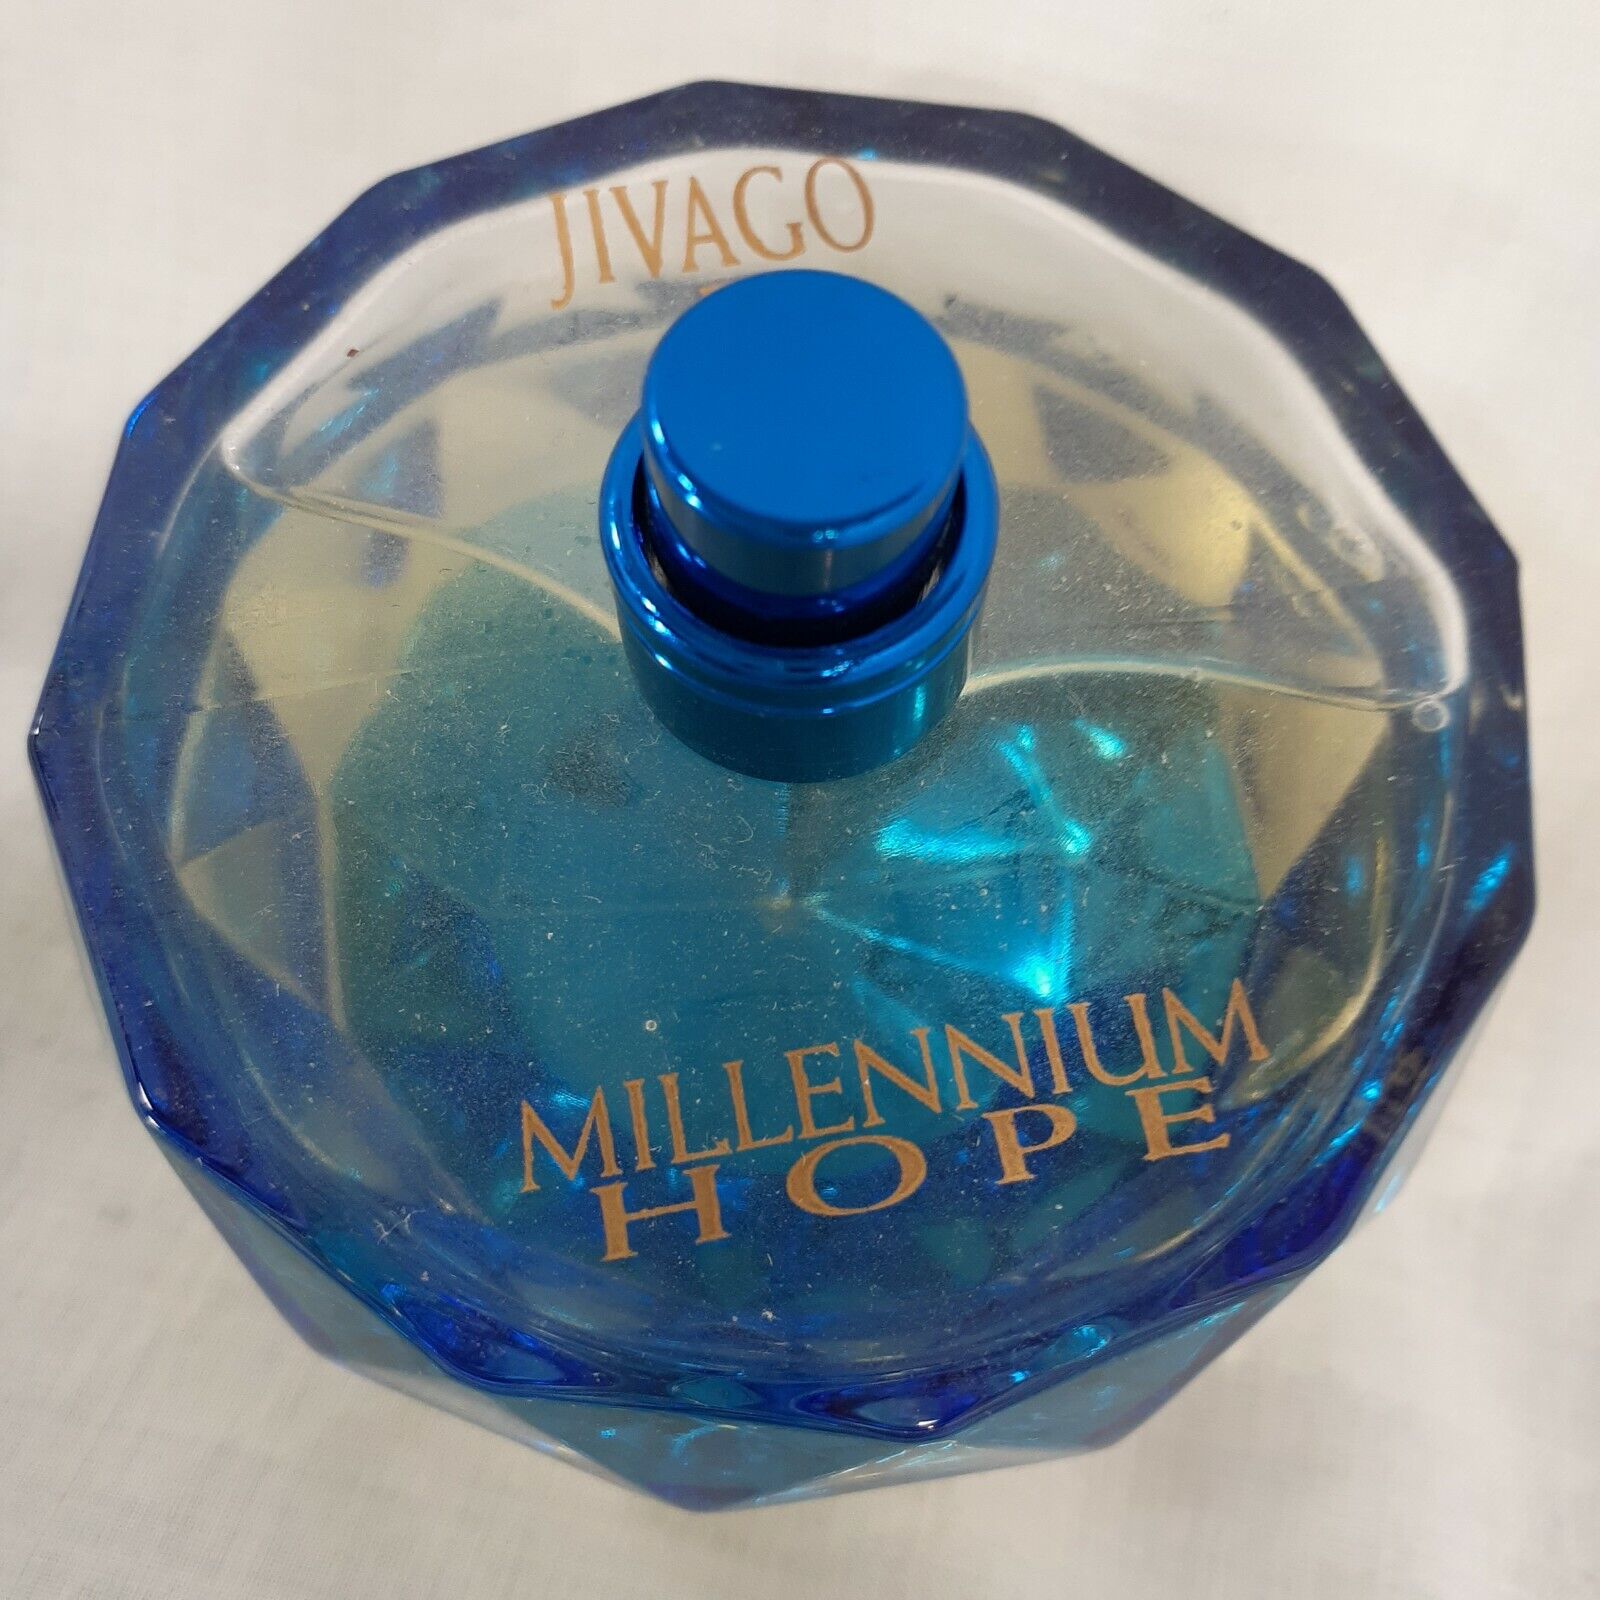 Vintage Jivago Millennium Hope 4.2 oz. Women's Fragrance Spray No Box 98% Full